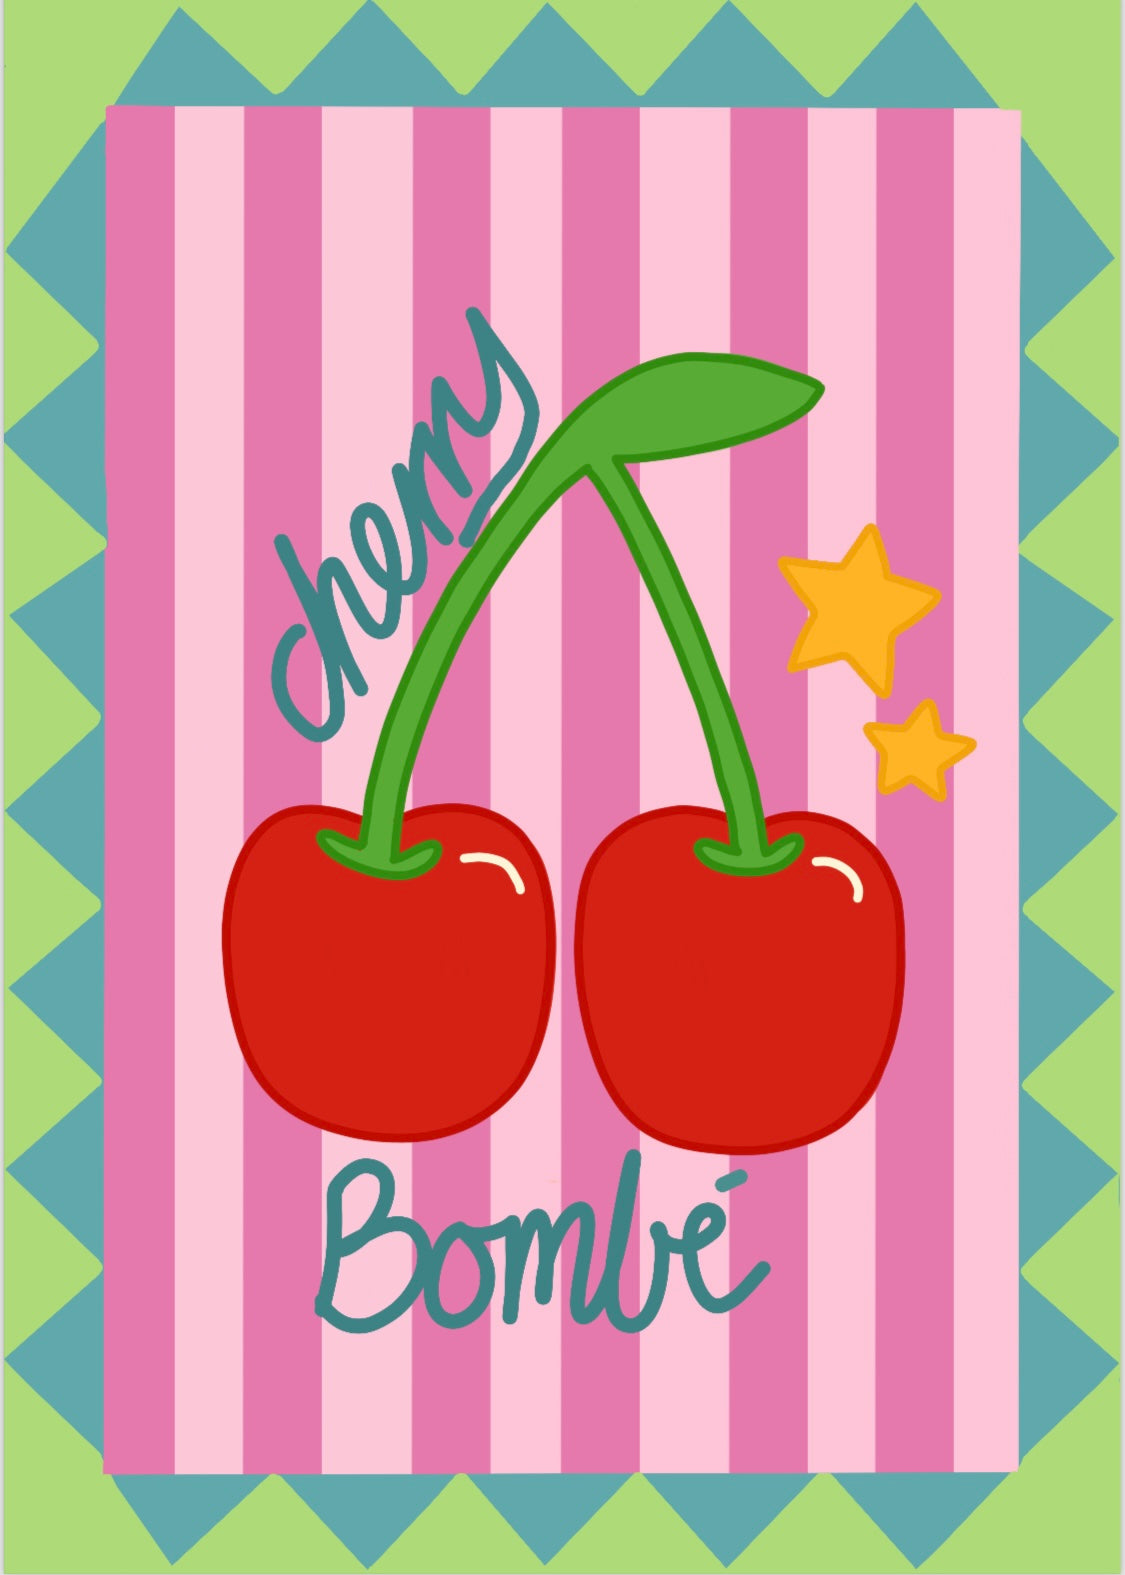 Cherry bombé poster